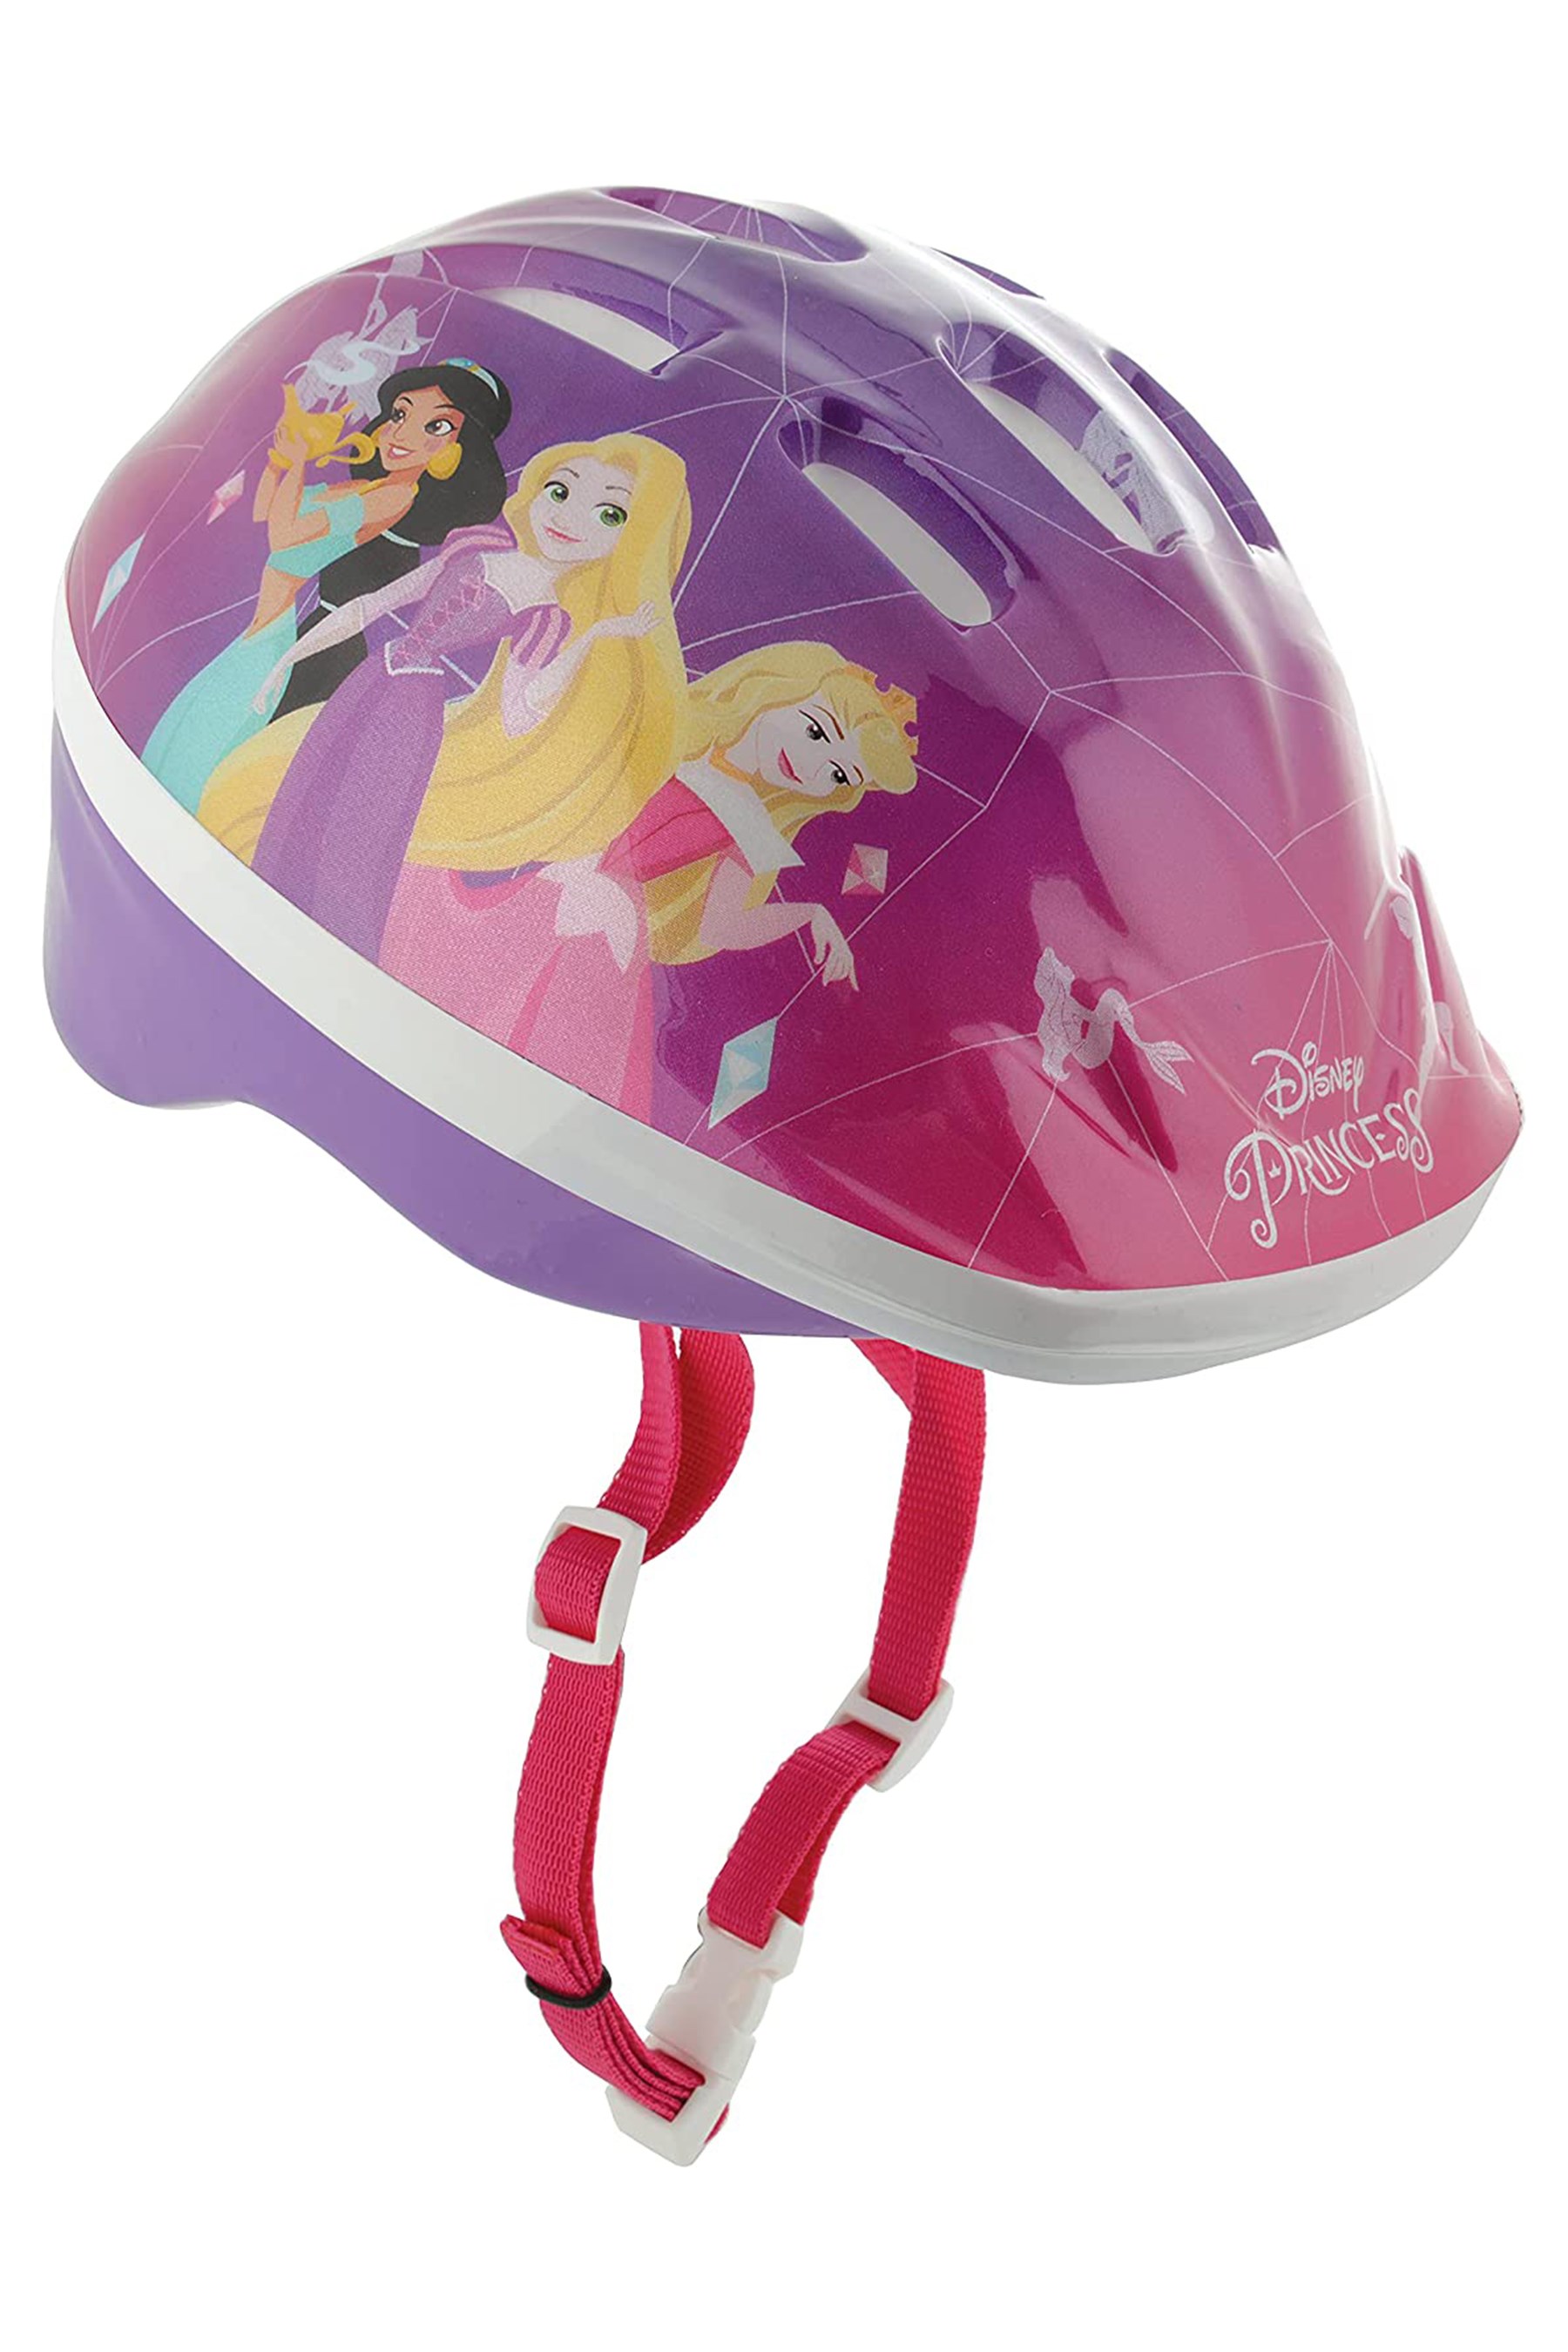 Disney Princess Kids Safety Cycling Helmet 48-52cm -